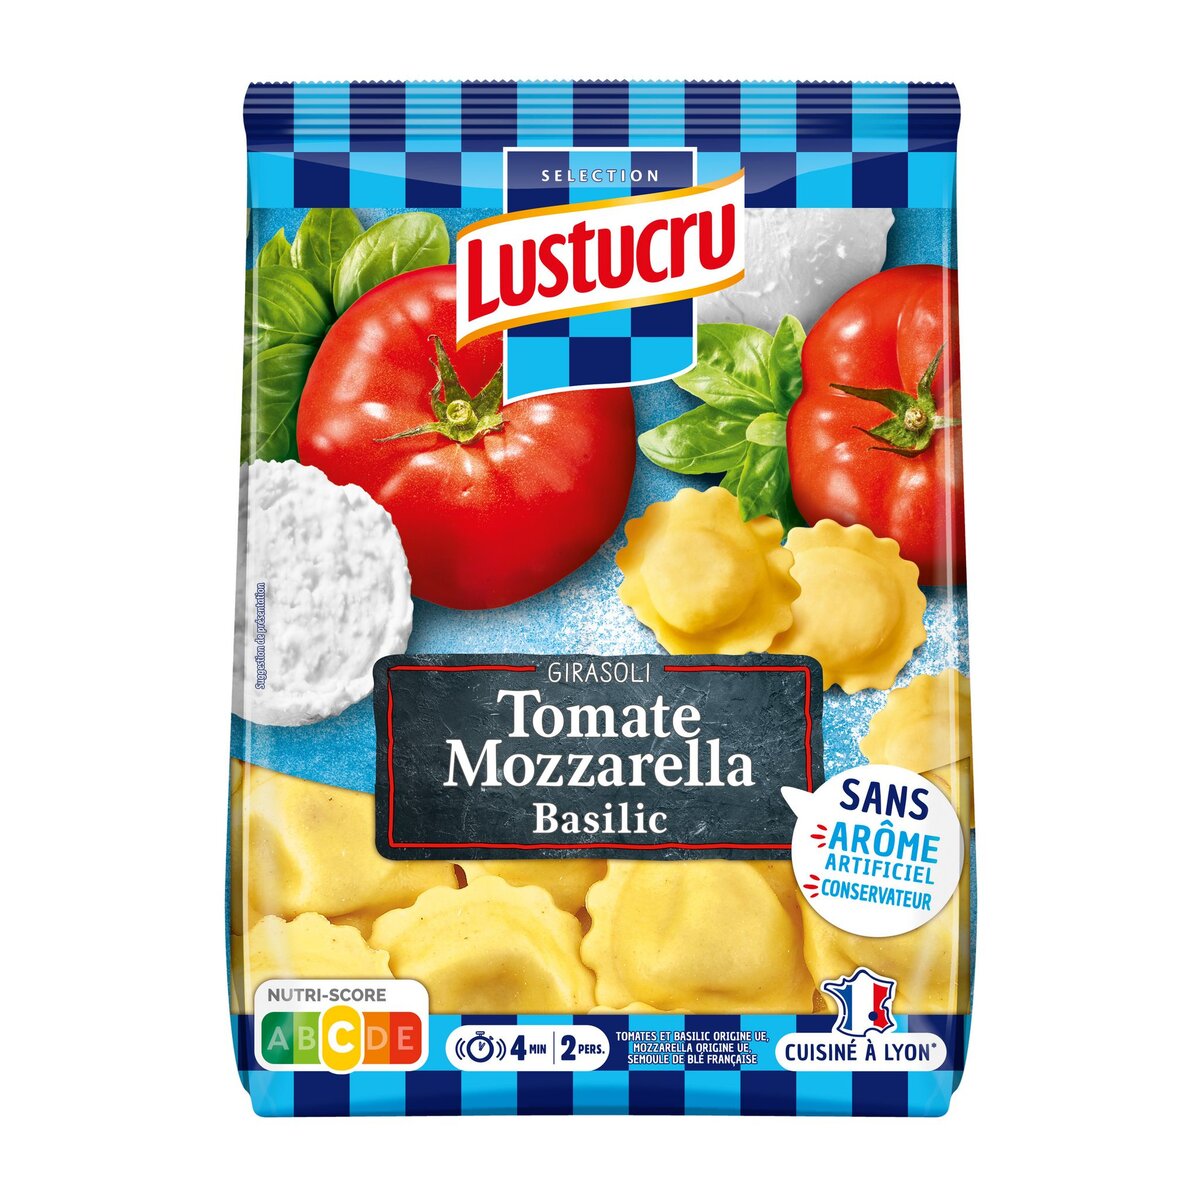 LUSTUCRU Girasoli tomate basilic mozzarella 2 portions 260g